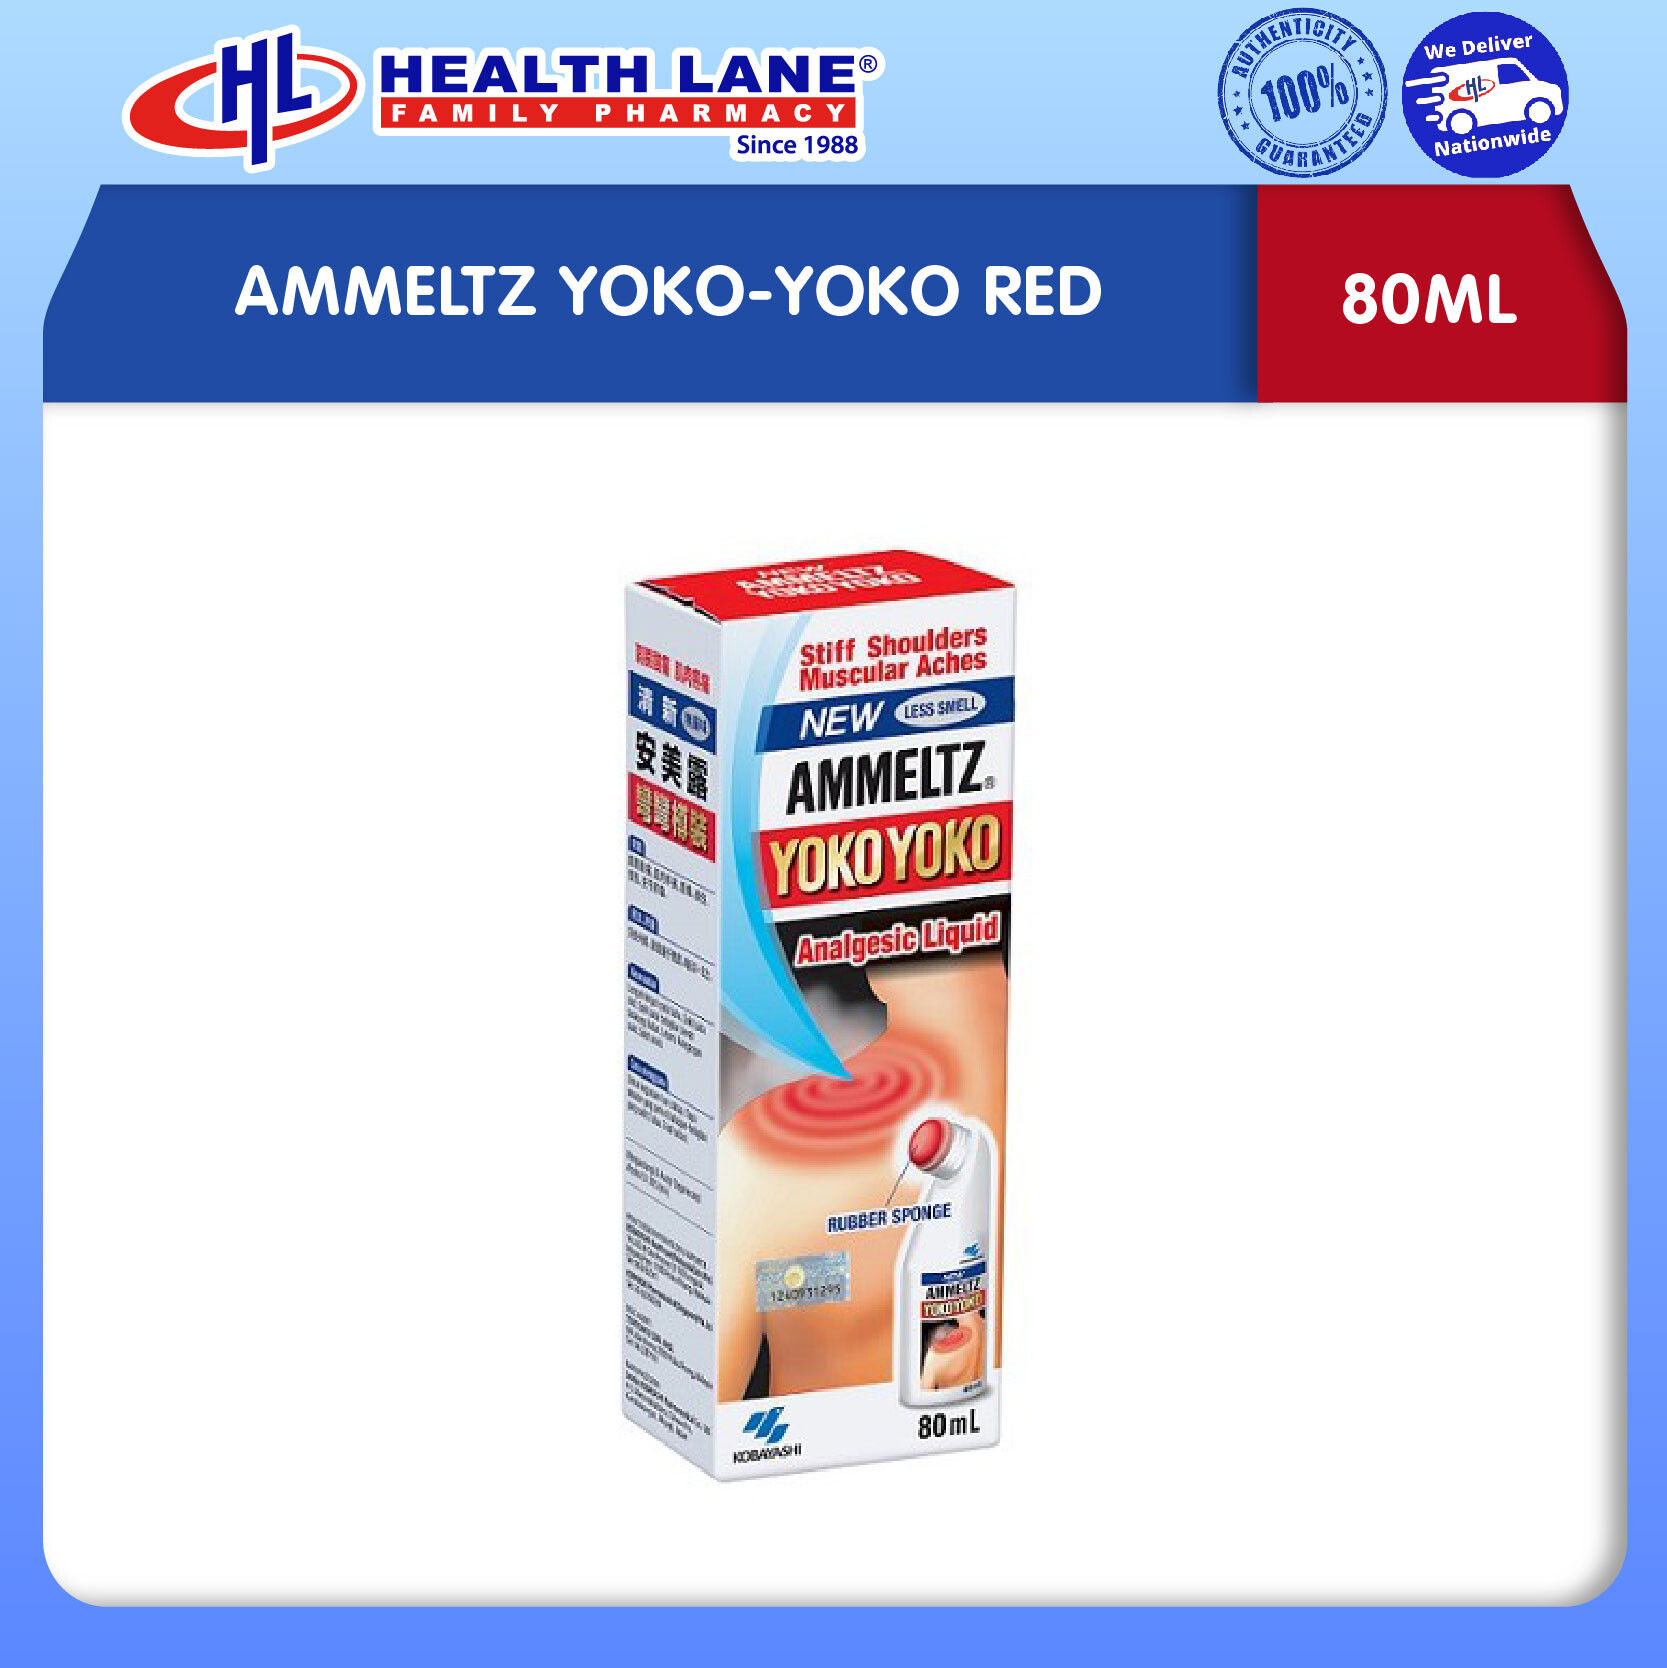 AMMELTZ YOKO-YOKO- RED (80ML)